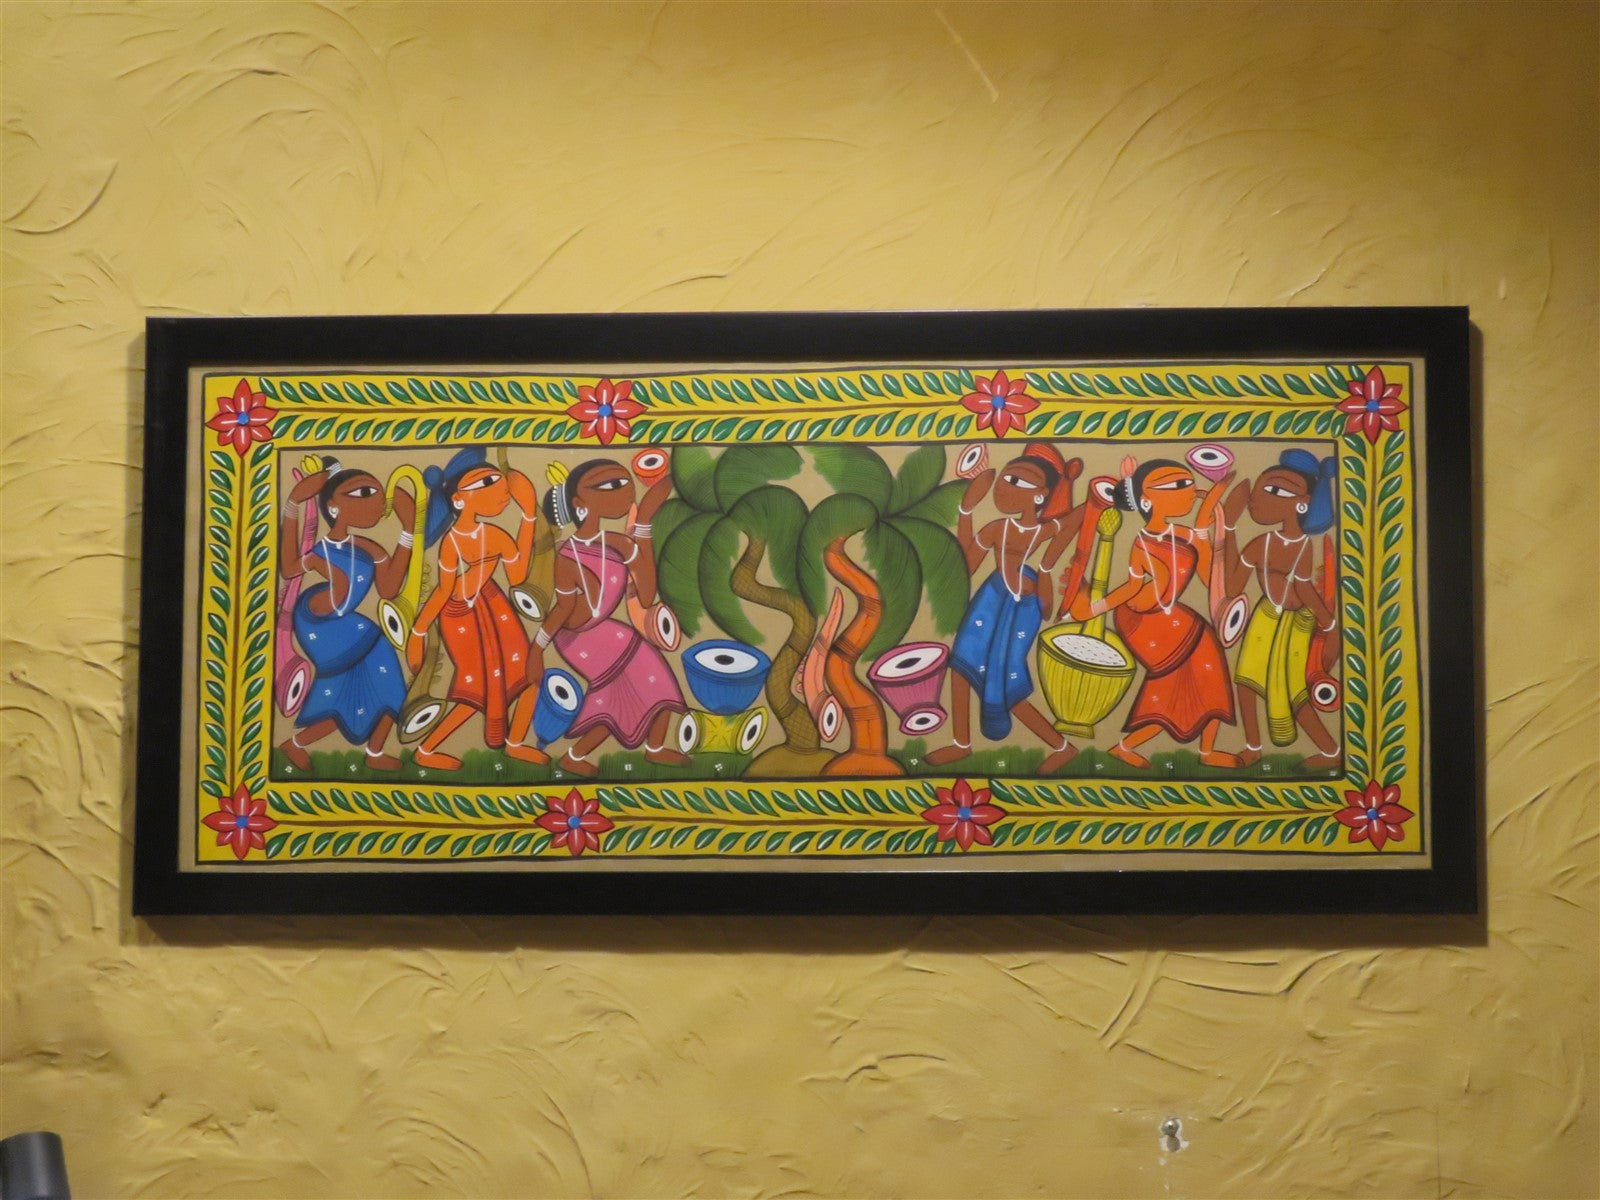 Tribal Dance Patachitra Hand Painted Wall Art Large